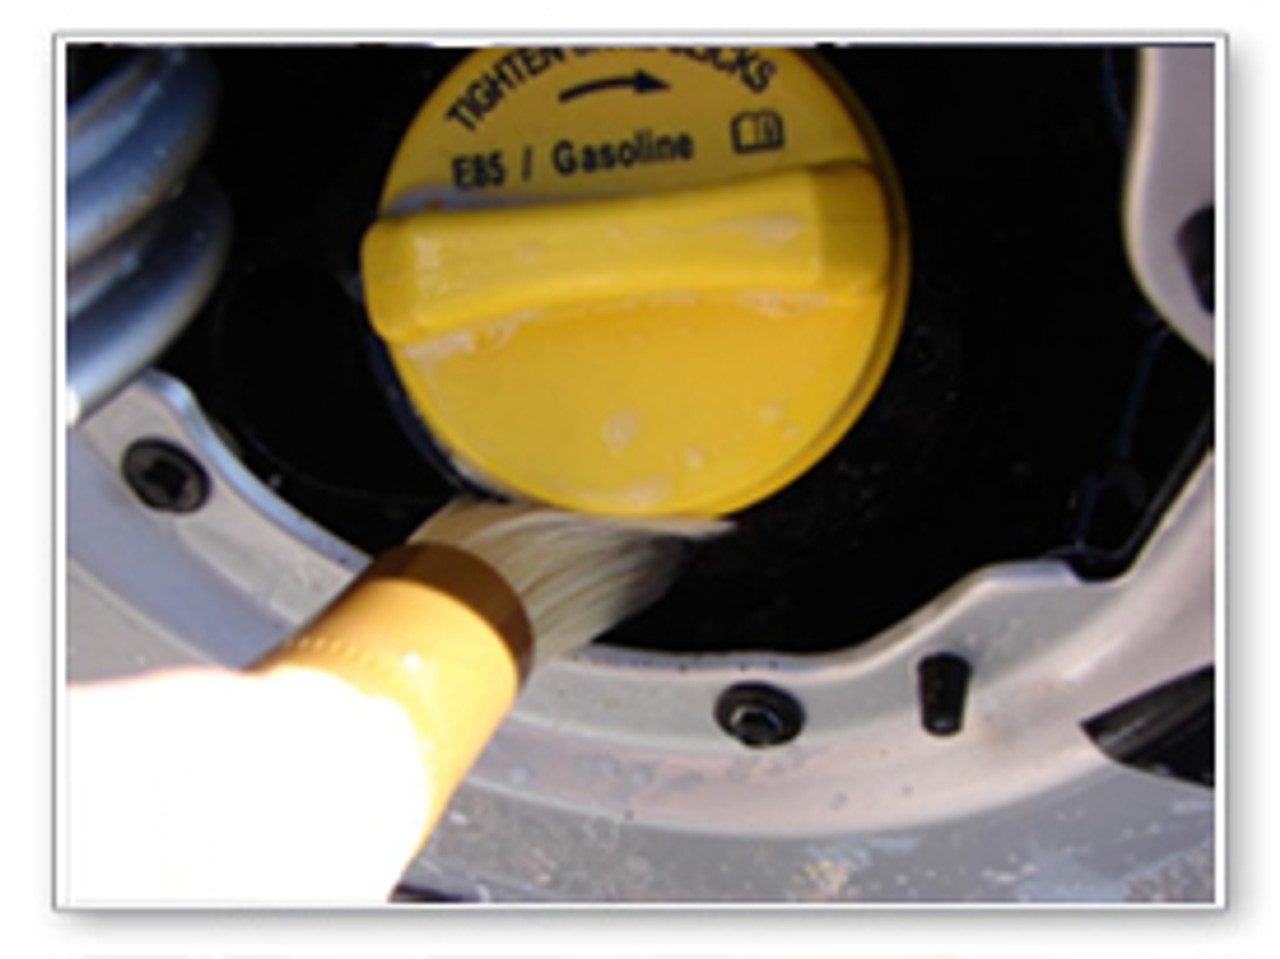 1X Auto Car Wheel Brush Black Plastic Handle Yellow Sponge Tire Rim Cleaner  Tool